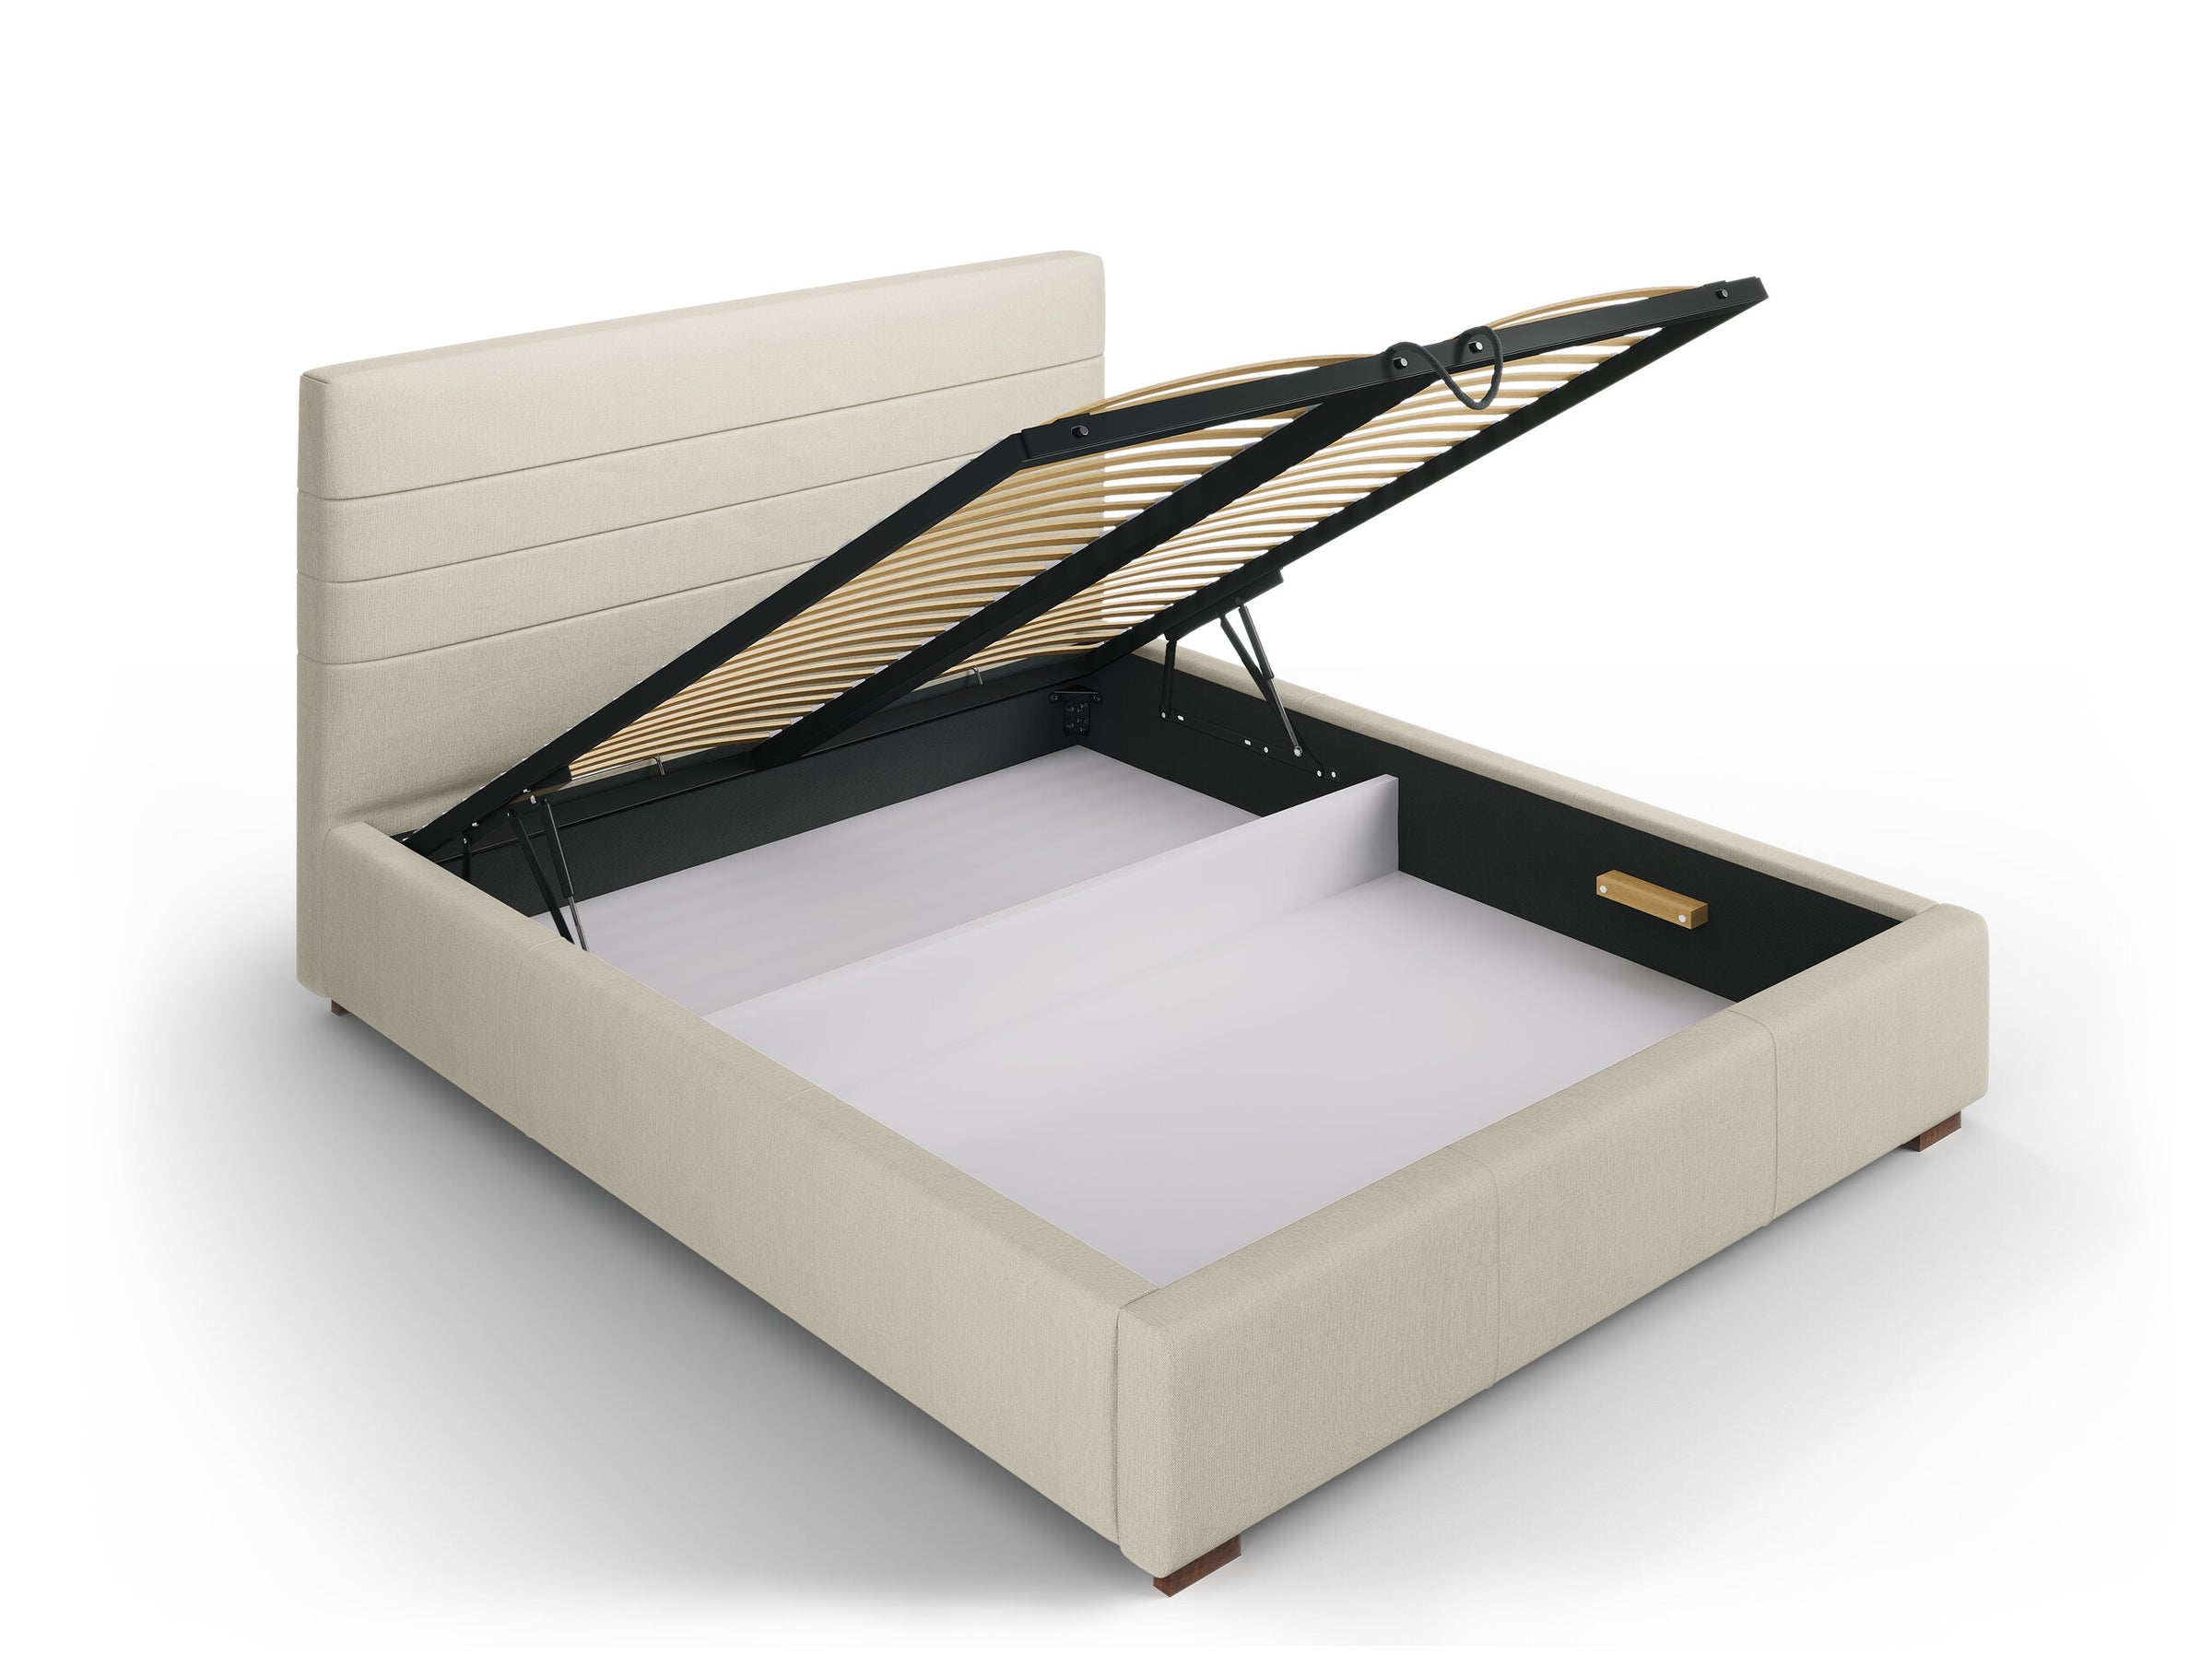 Aranda beds & mattresses structured fabric beige